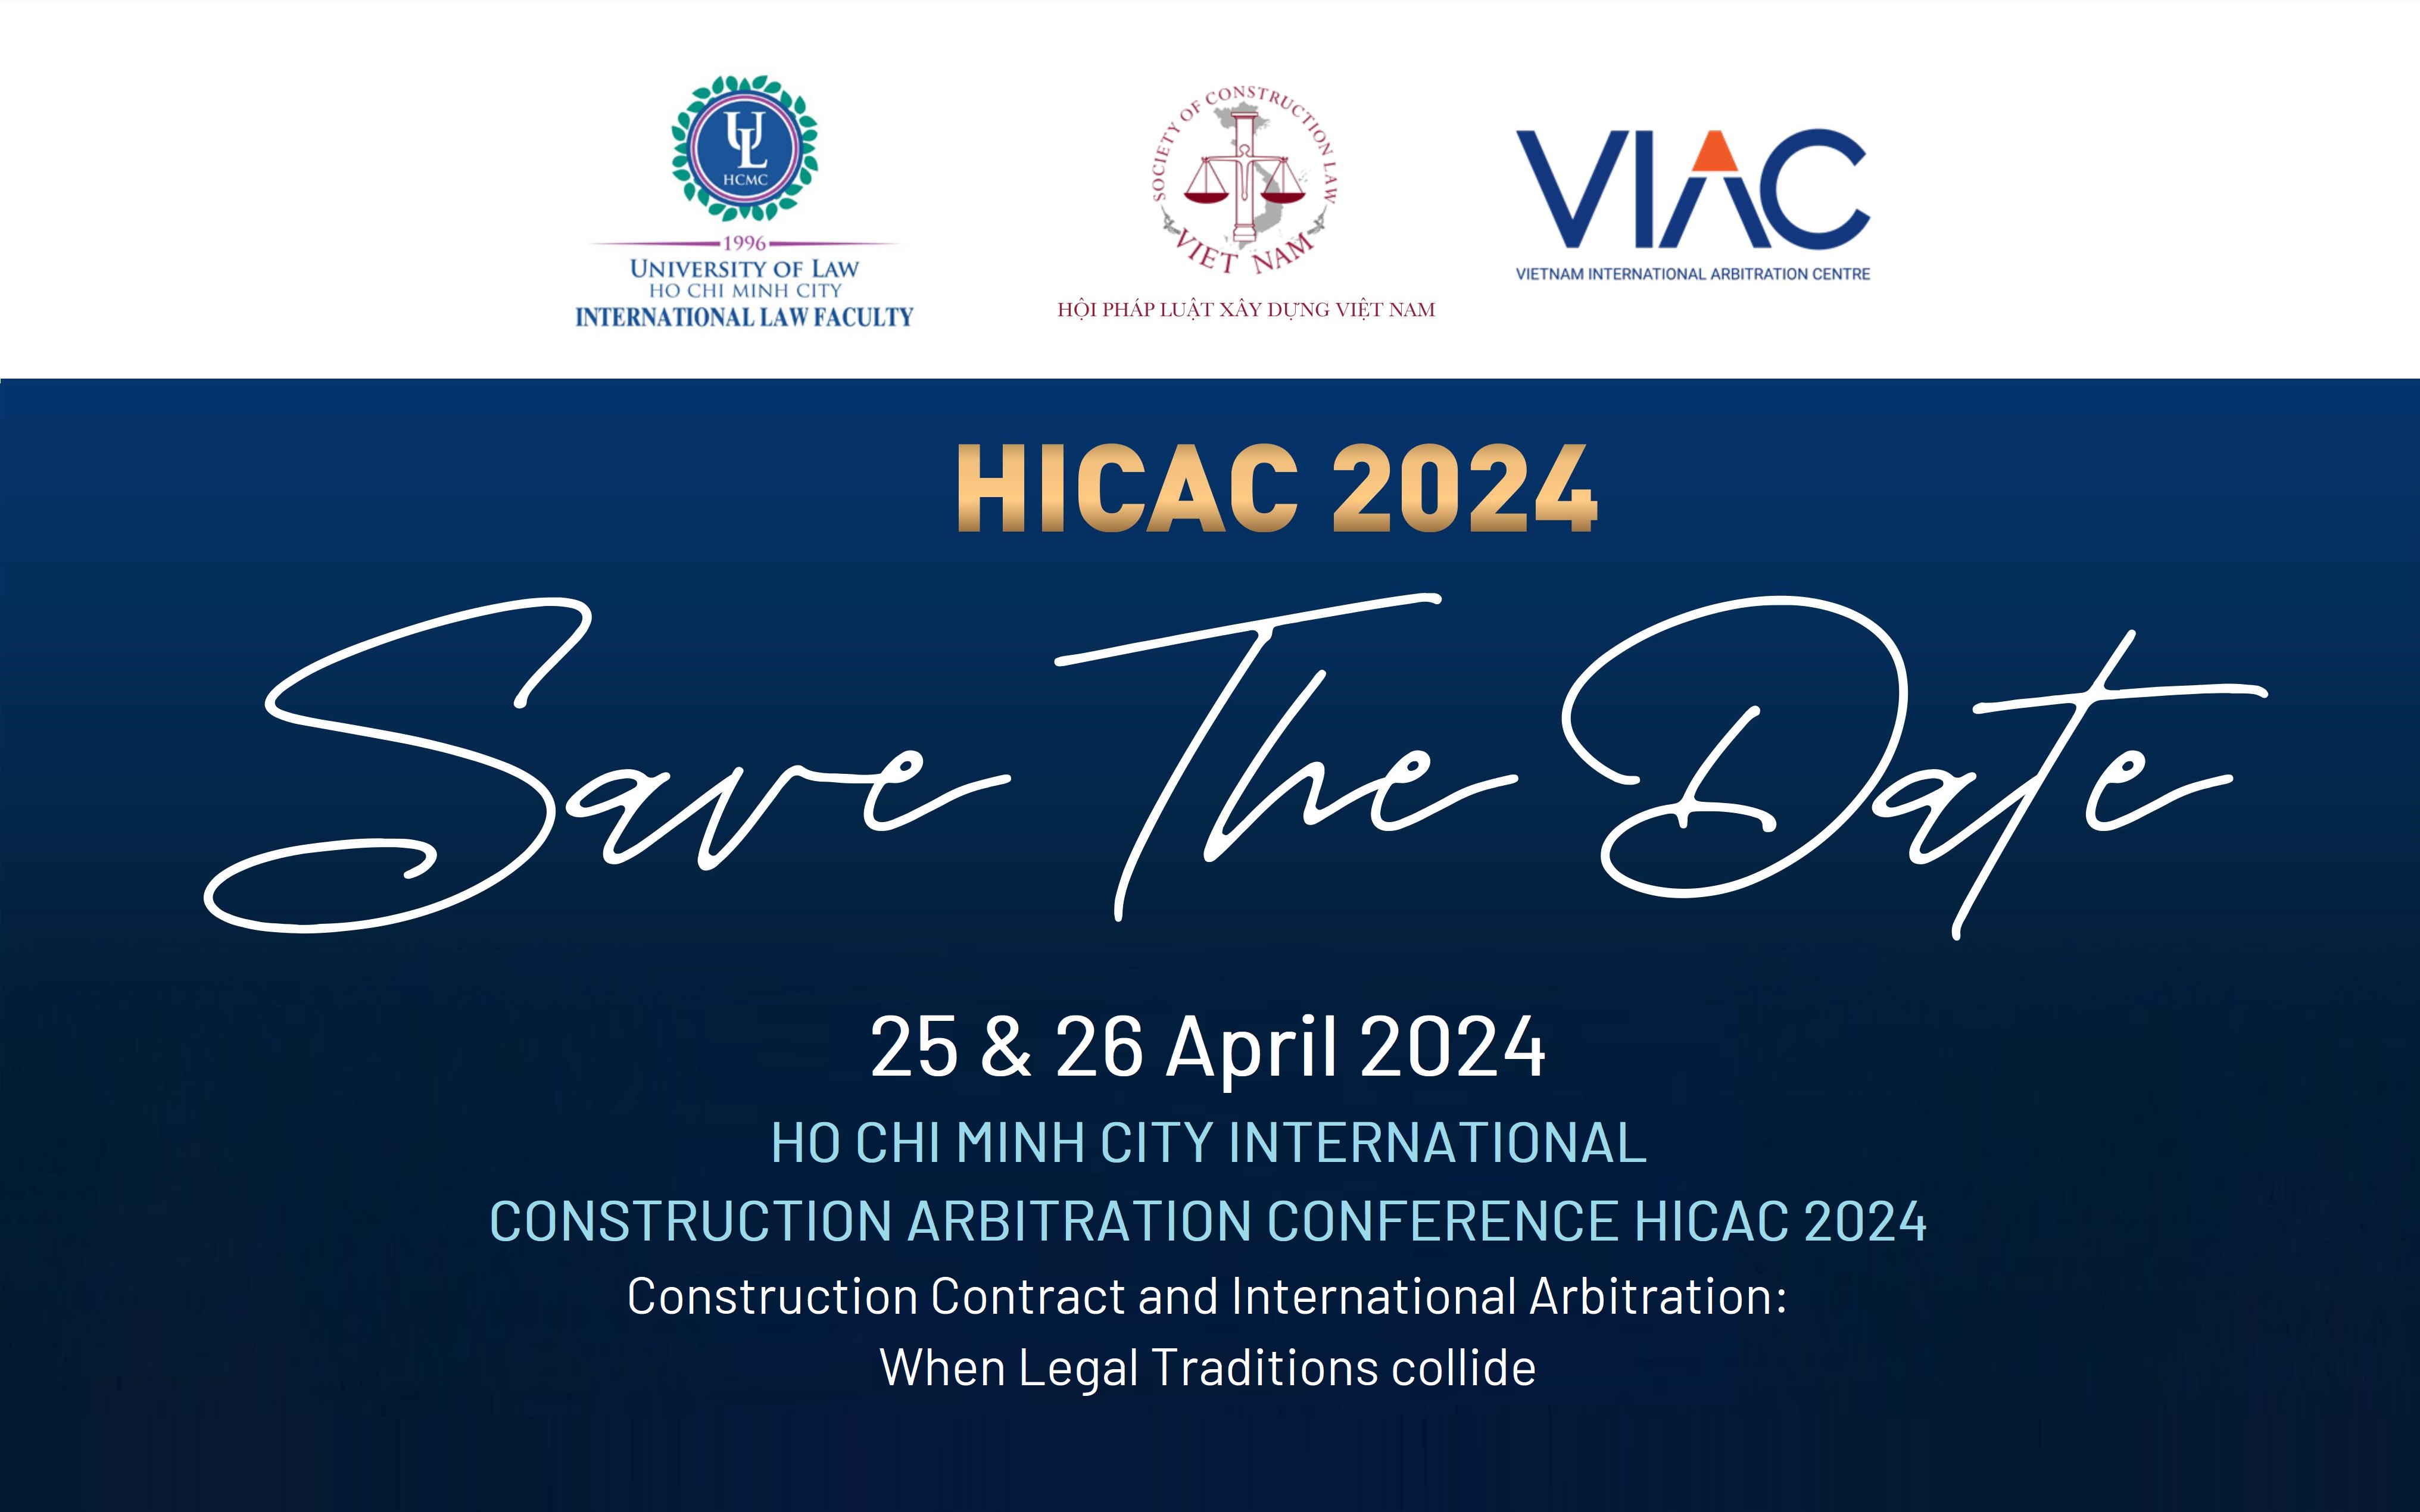 Ho Chi Minh City International Construction Arbitration Conference HICAC 2024